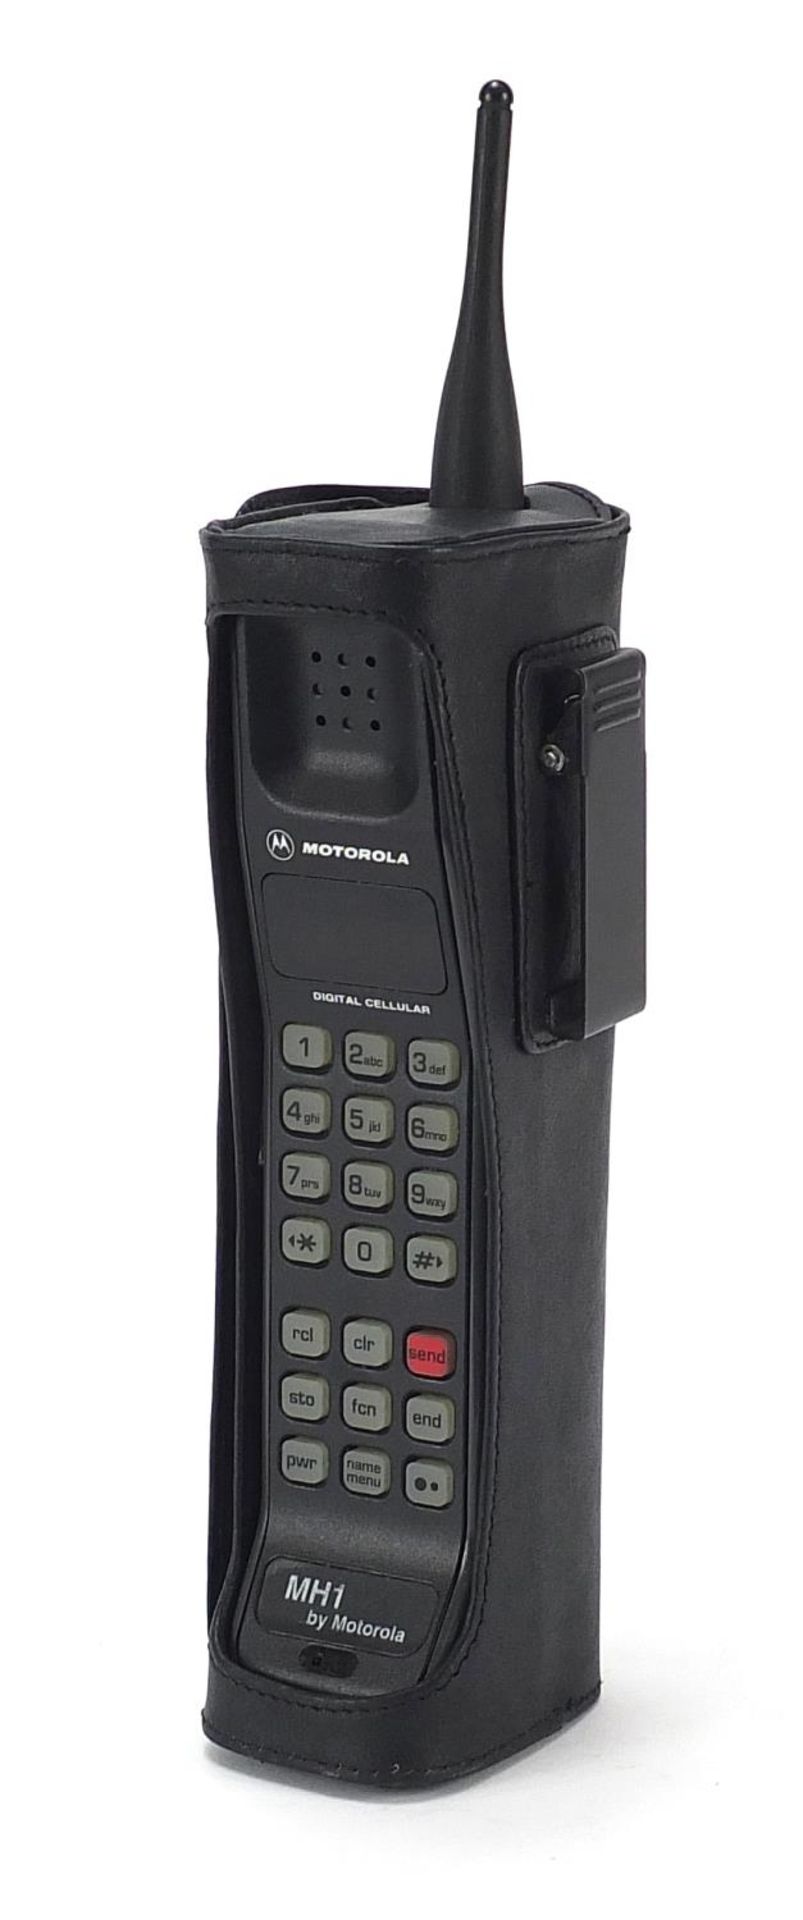 Vintage Motorola MH1 'brick' mobile phone, 27cm high including aerial